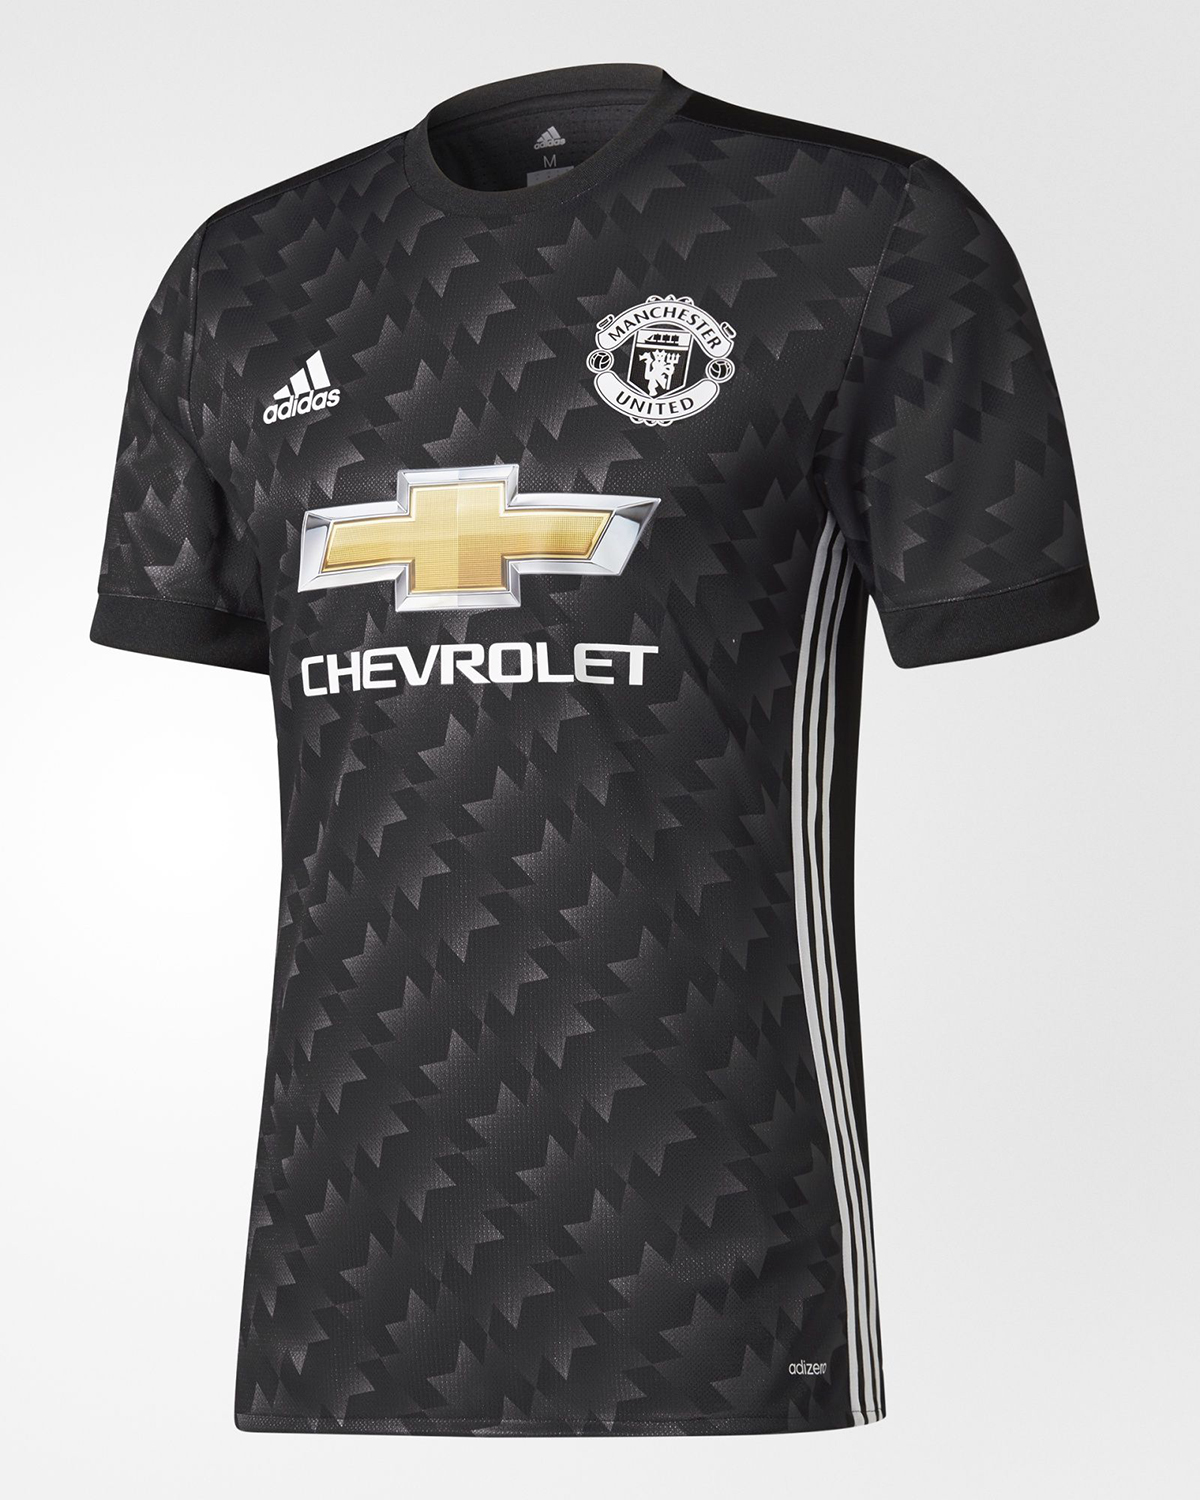 Manchester United adidas Away Kit 2017 18